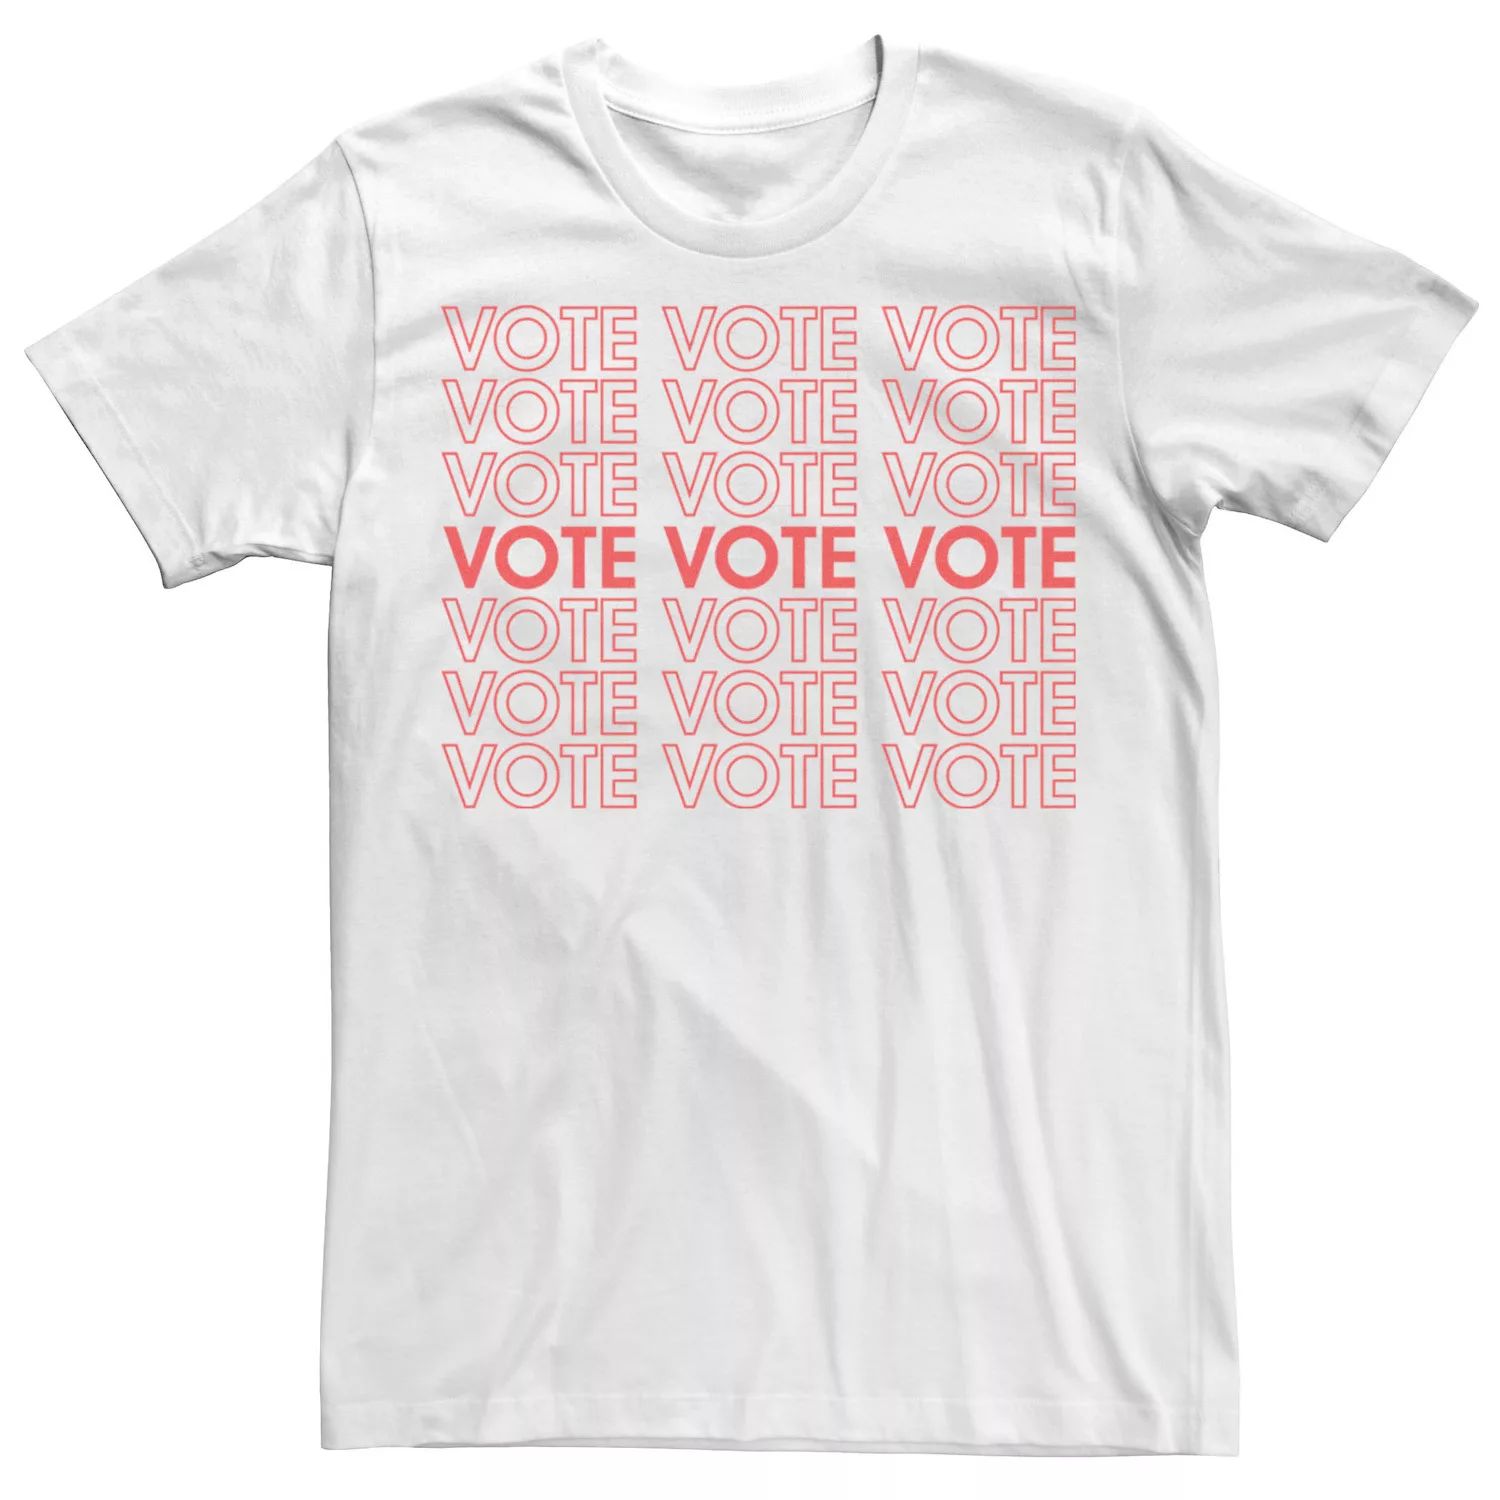 Мужская футболка Vote Vote Vote Text Stack Licensed Character